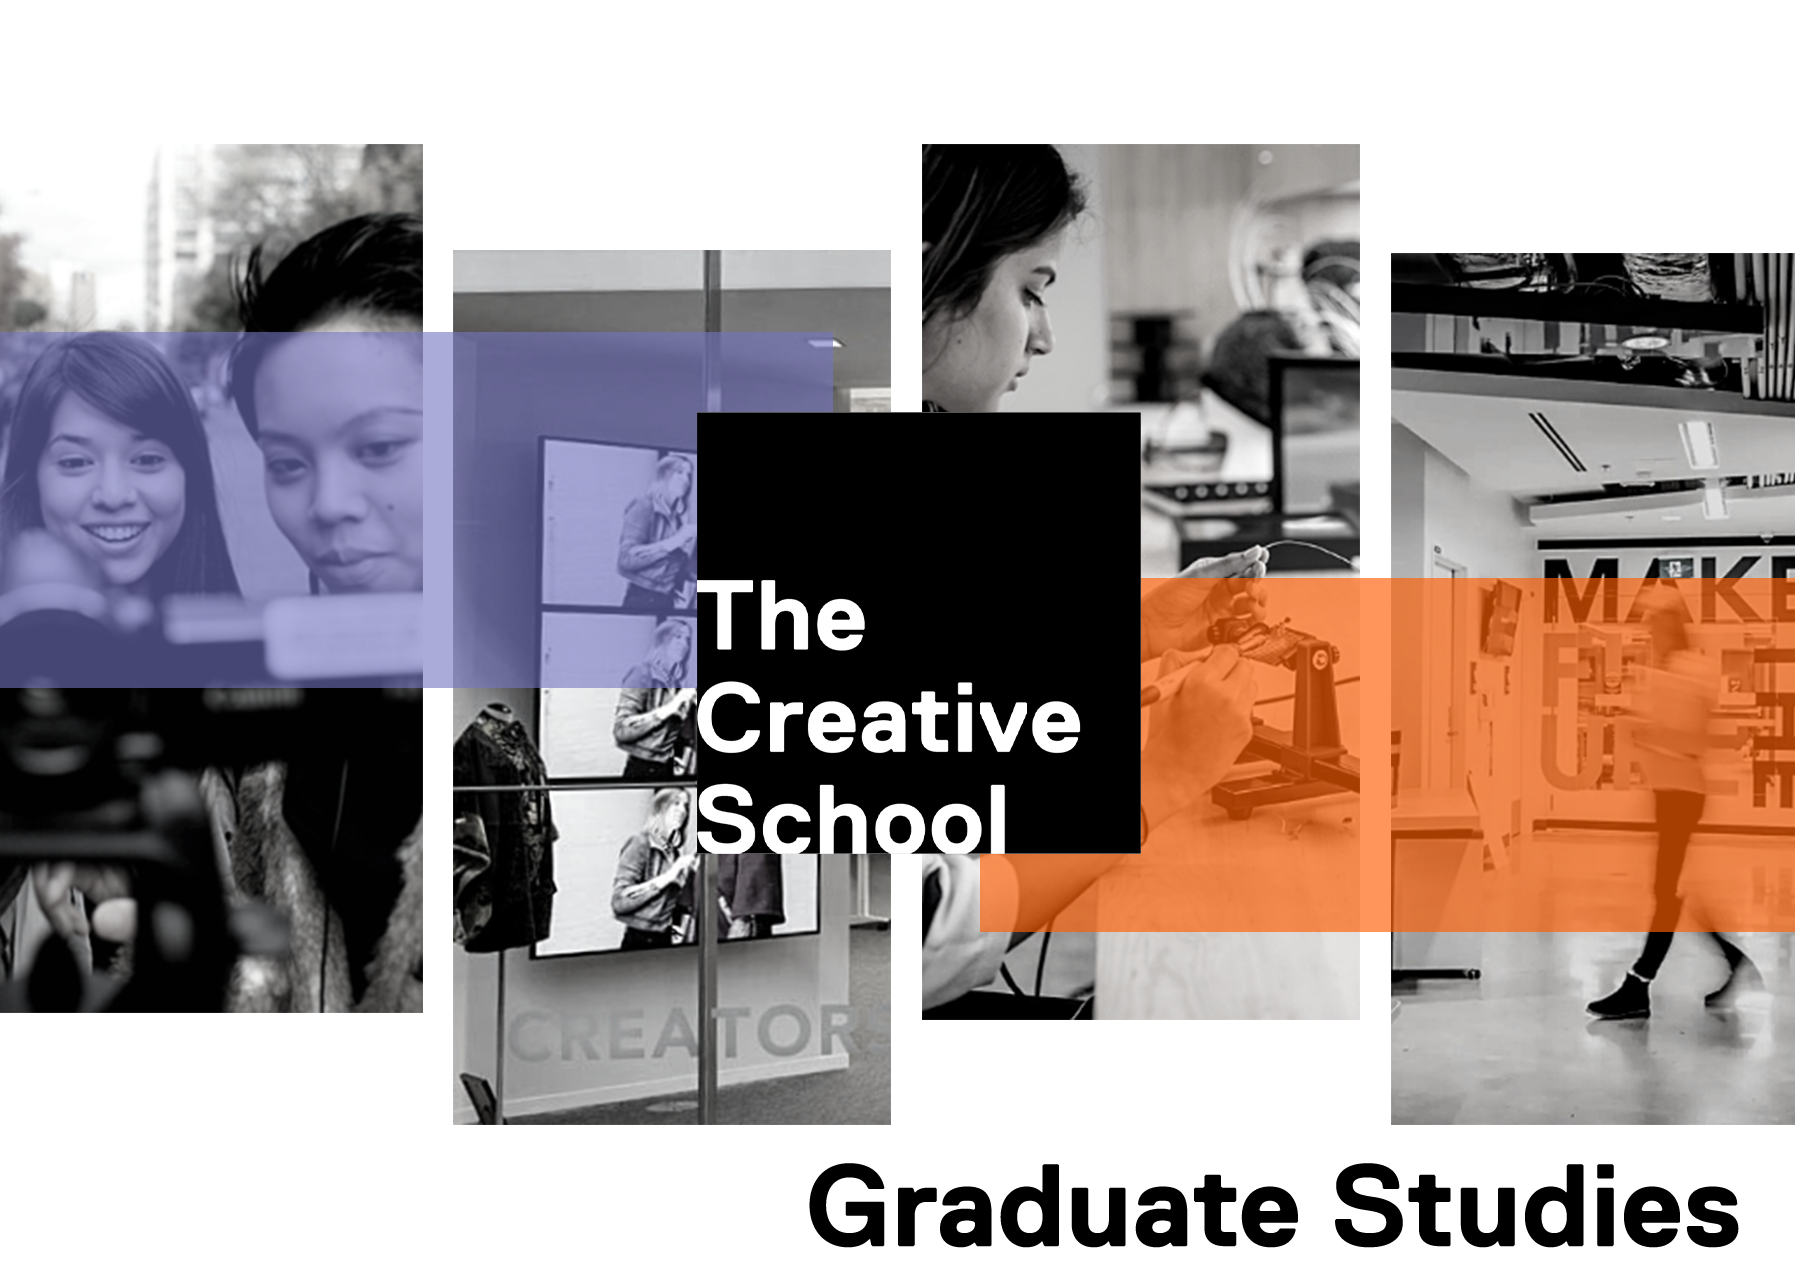 The Creative School - Graduate Studies